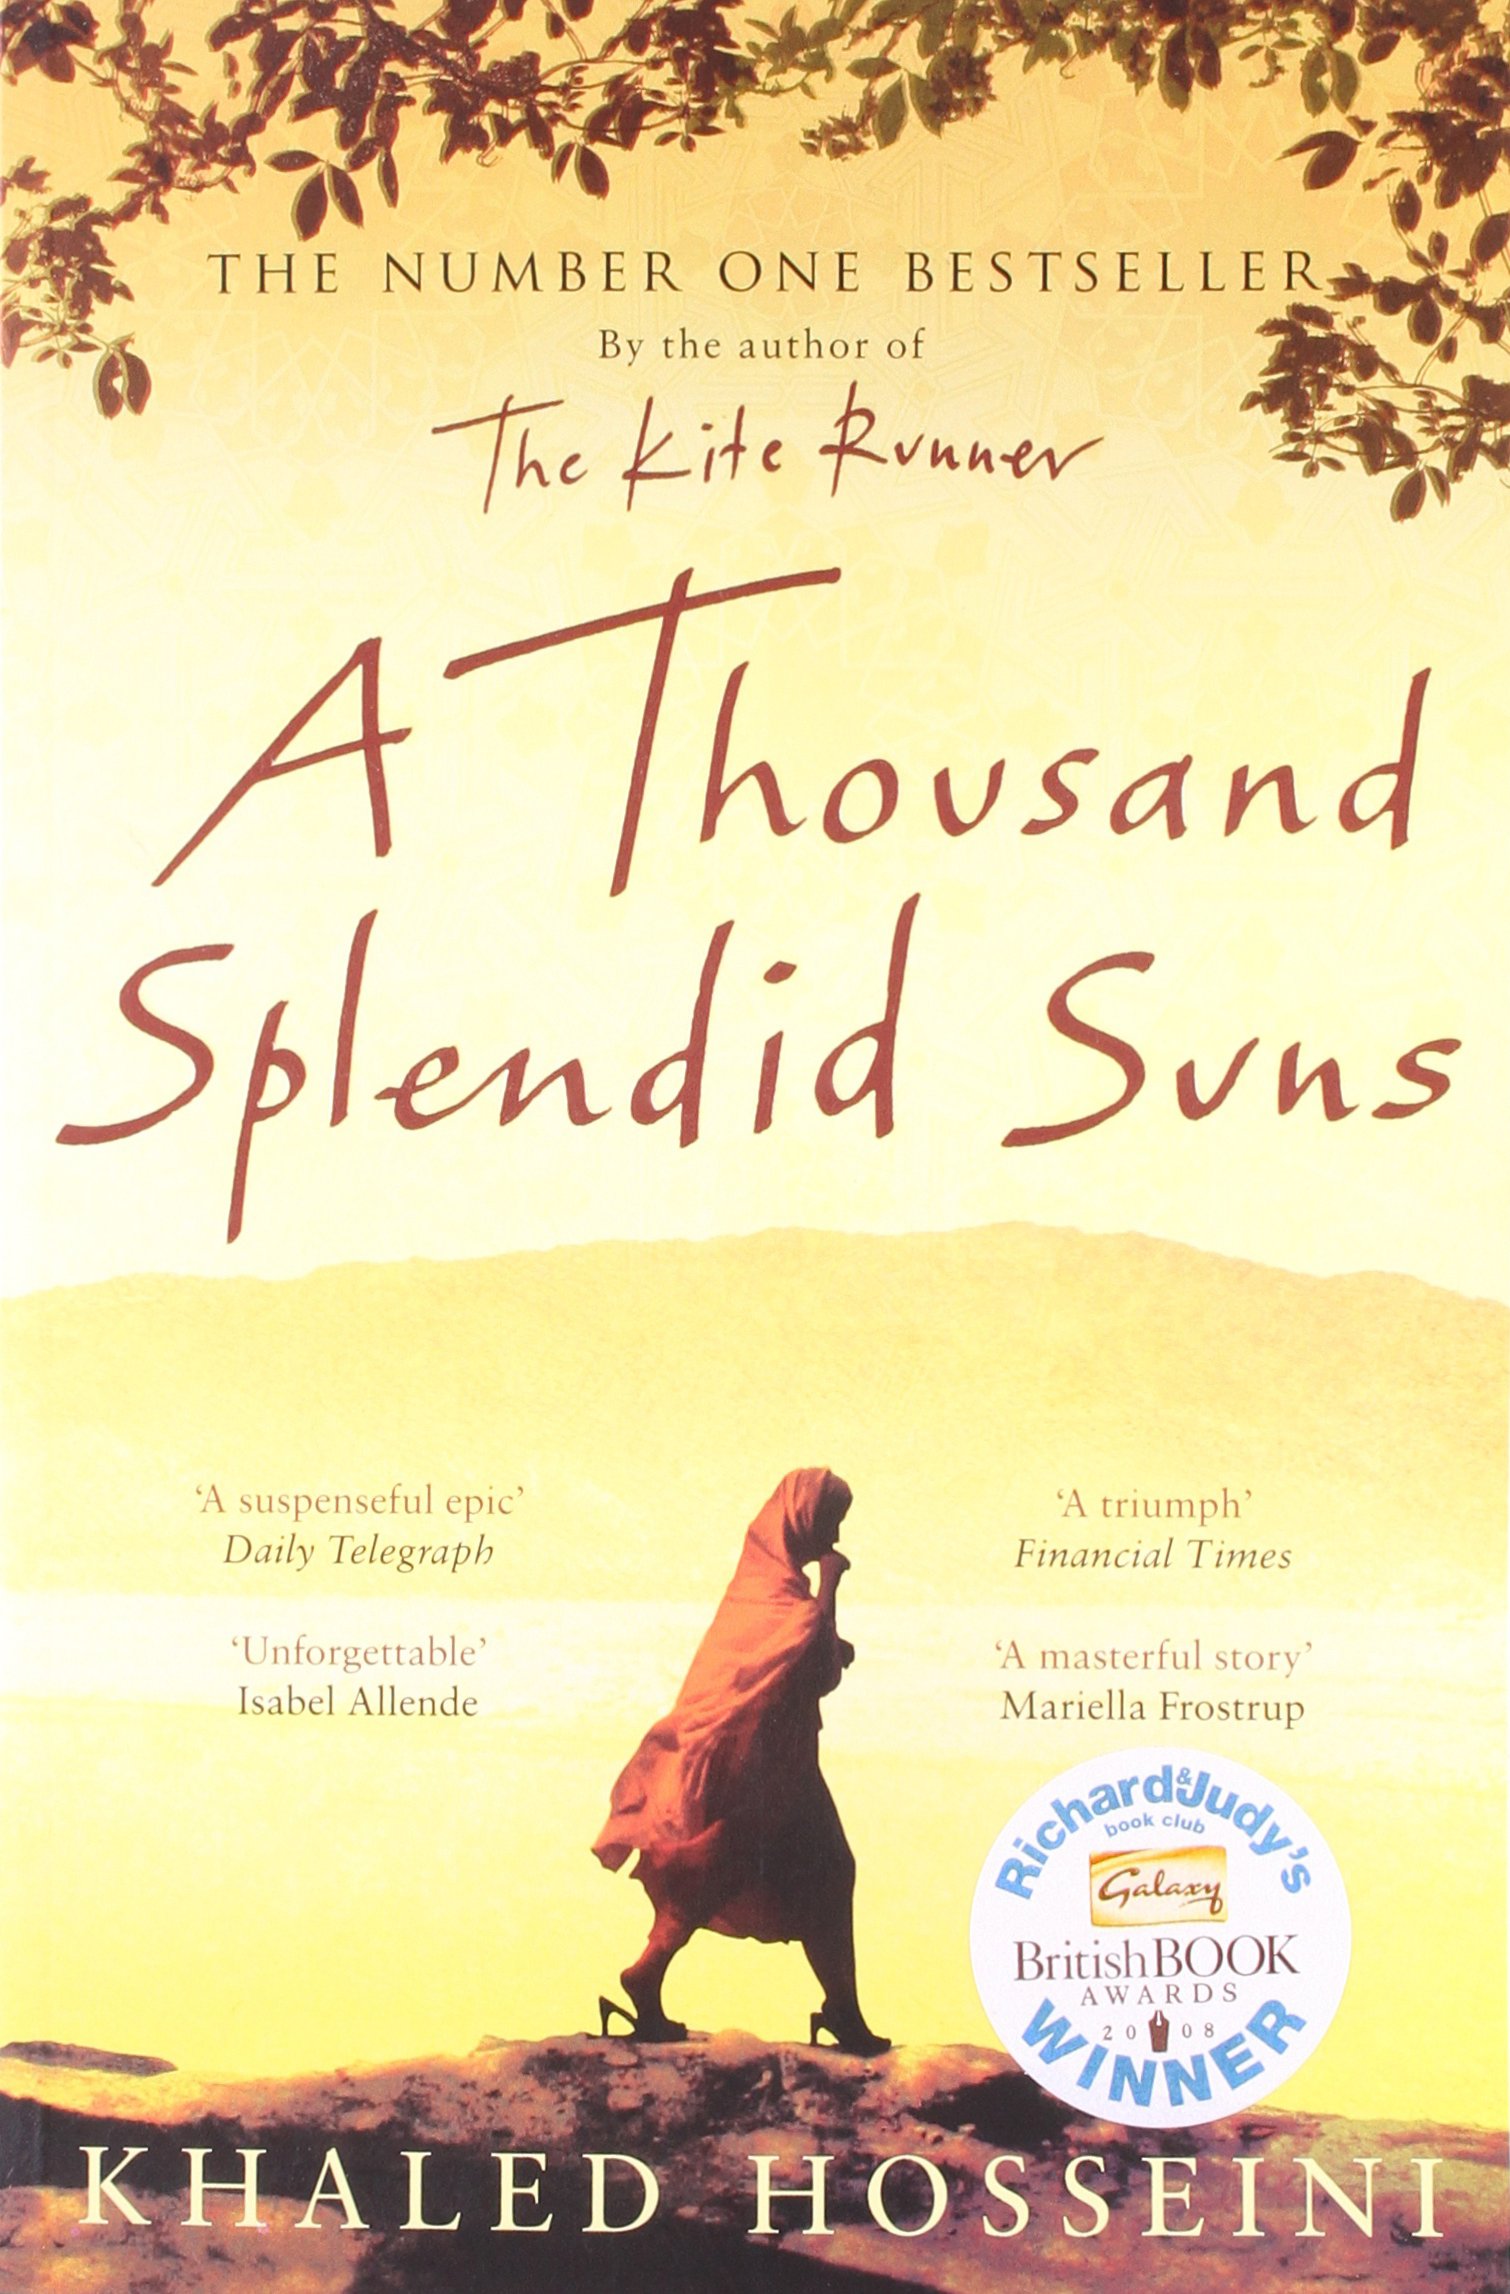 Book Review - A Thousand Splendid Suns by Khaled Hosseini